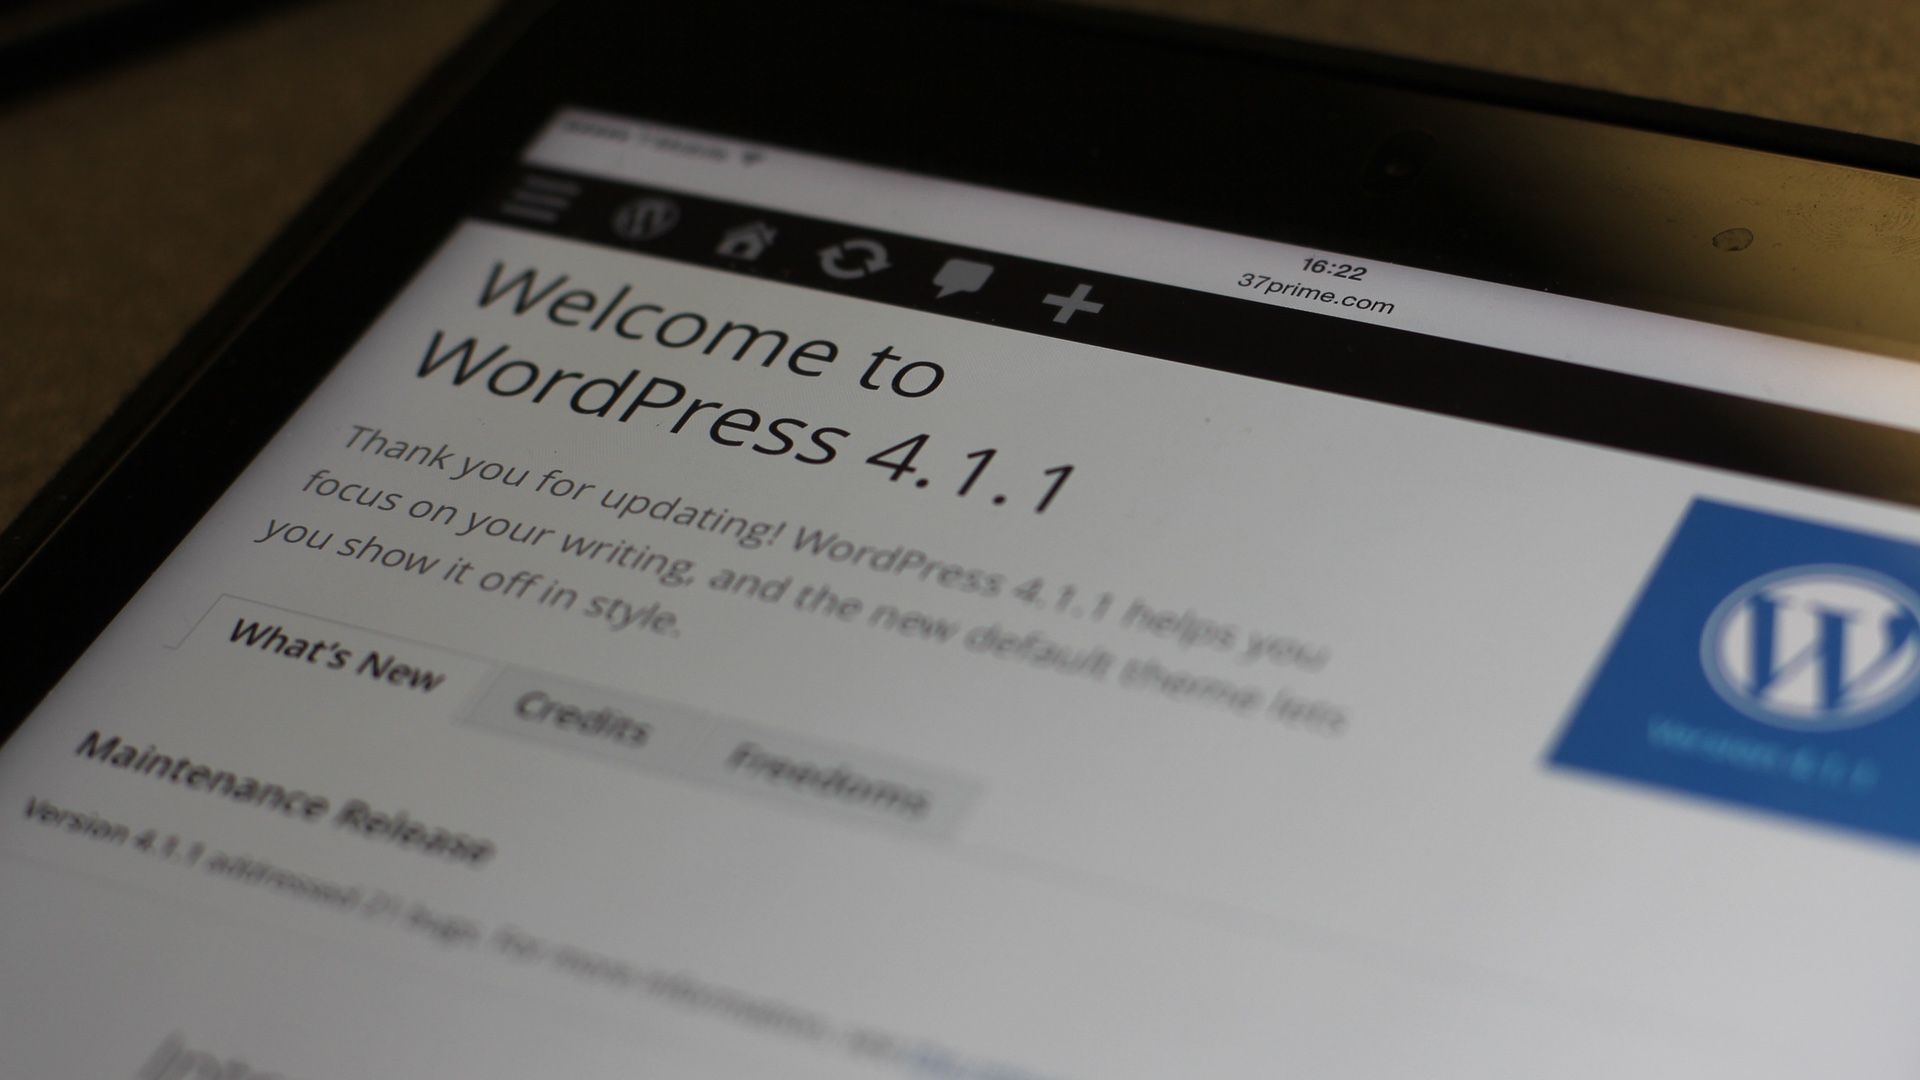 WordPress 4.1.1